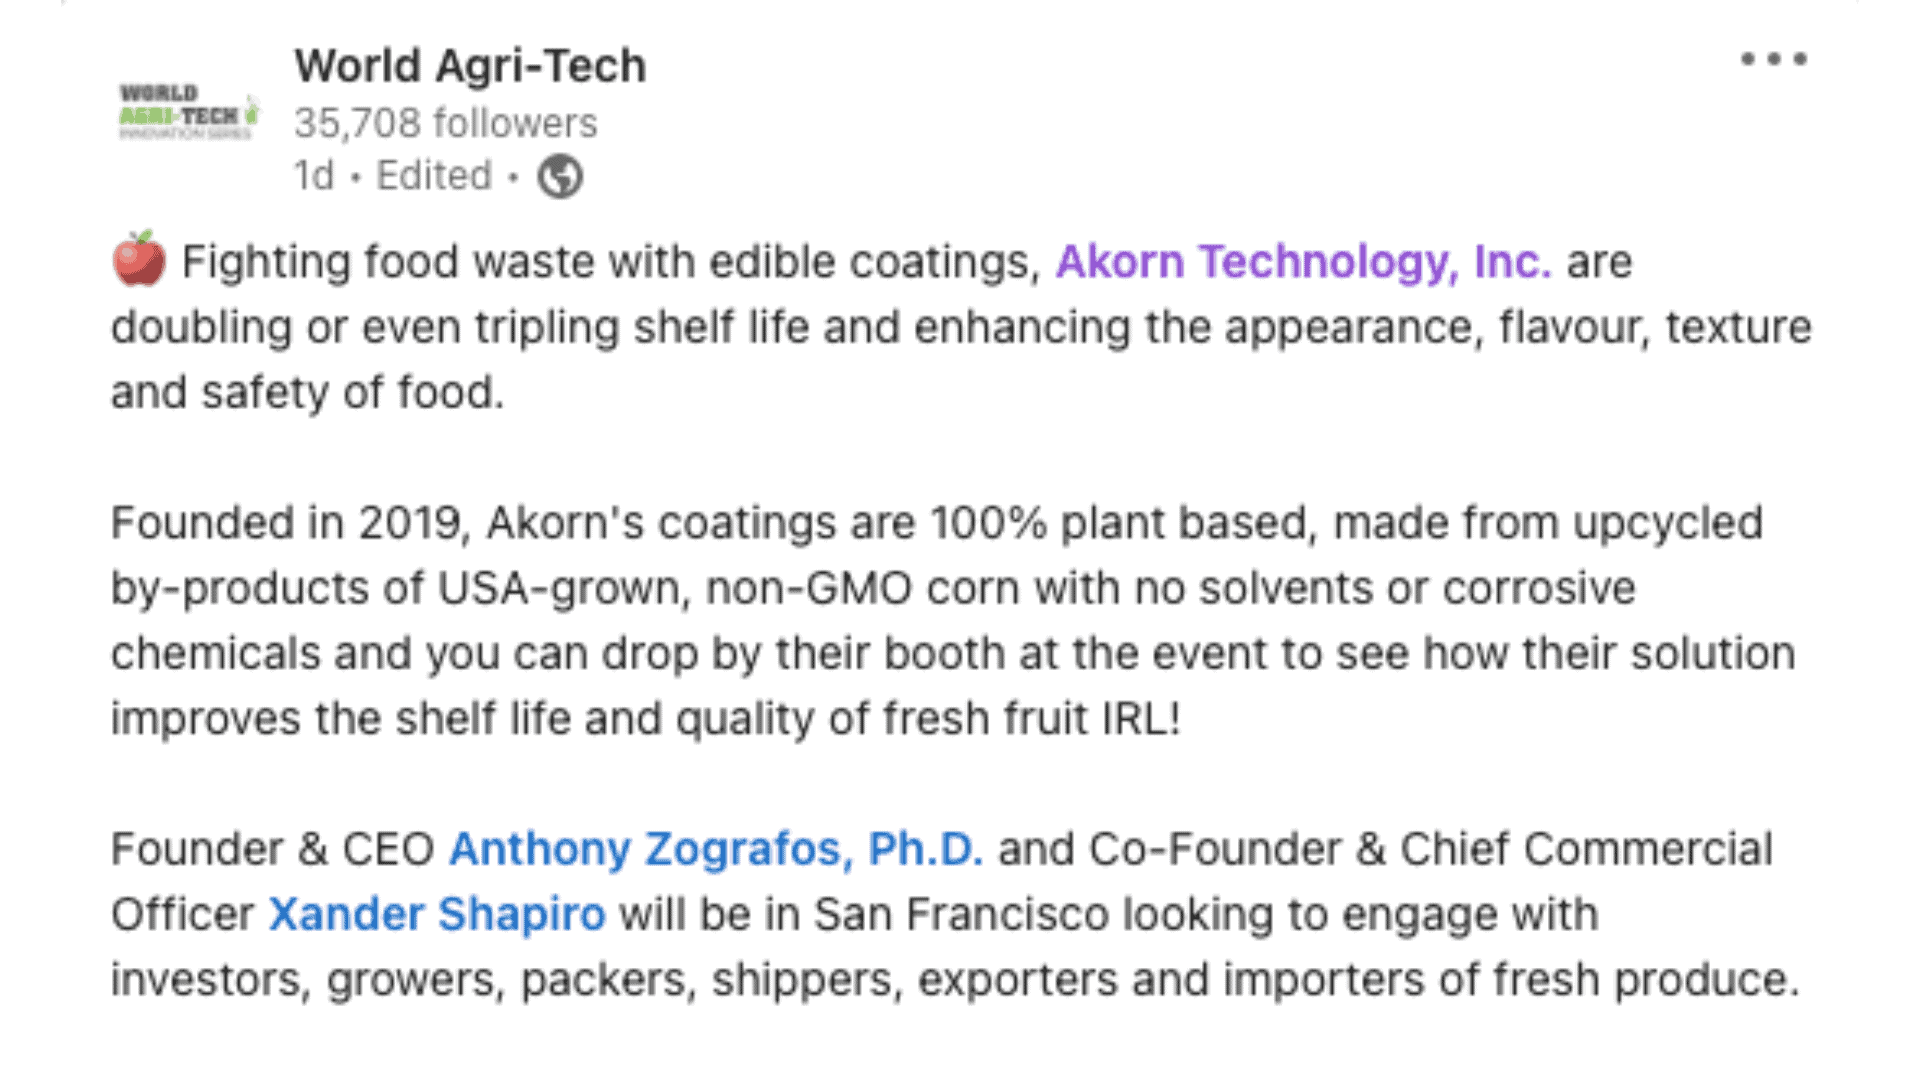 World agri-tech post on Akorn Tech